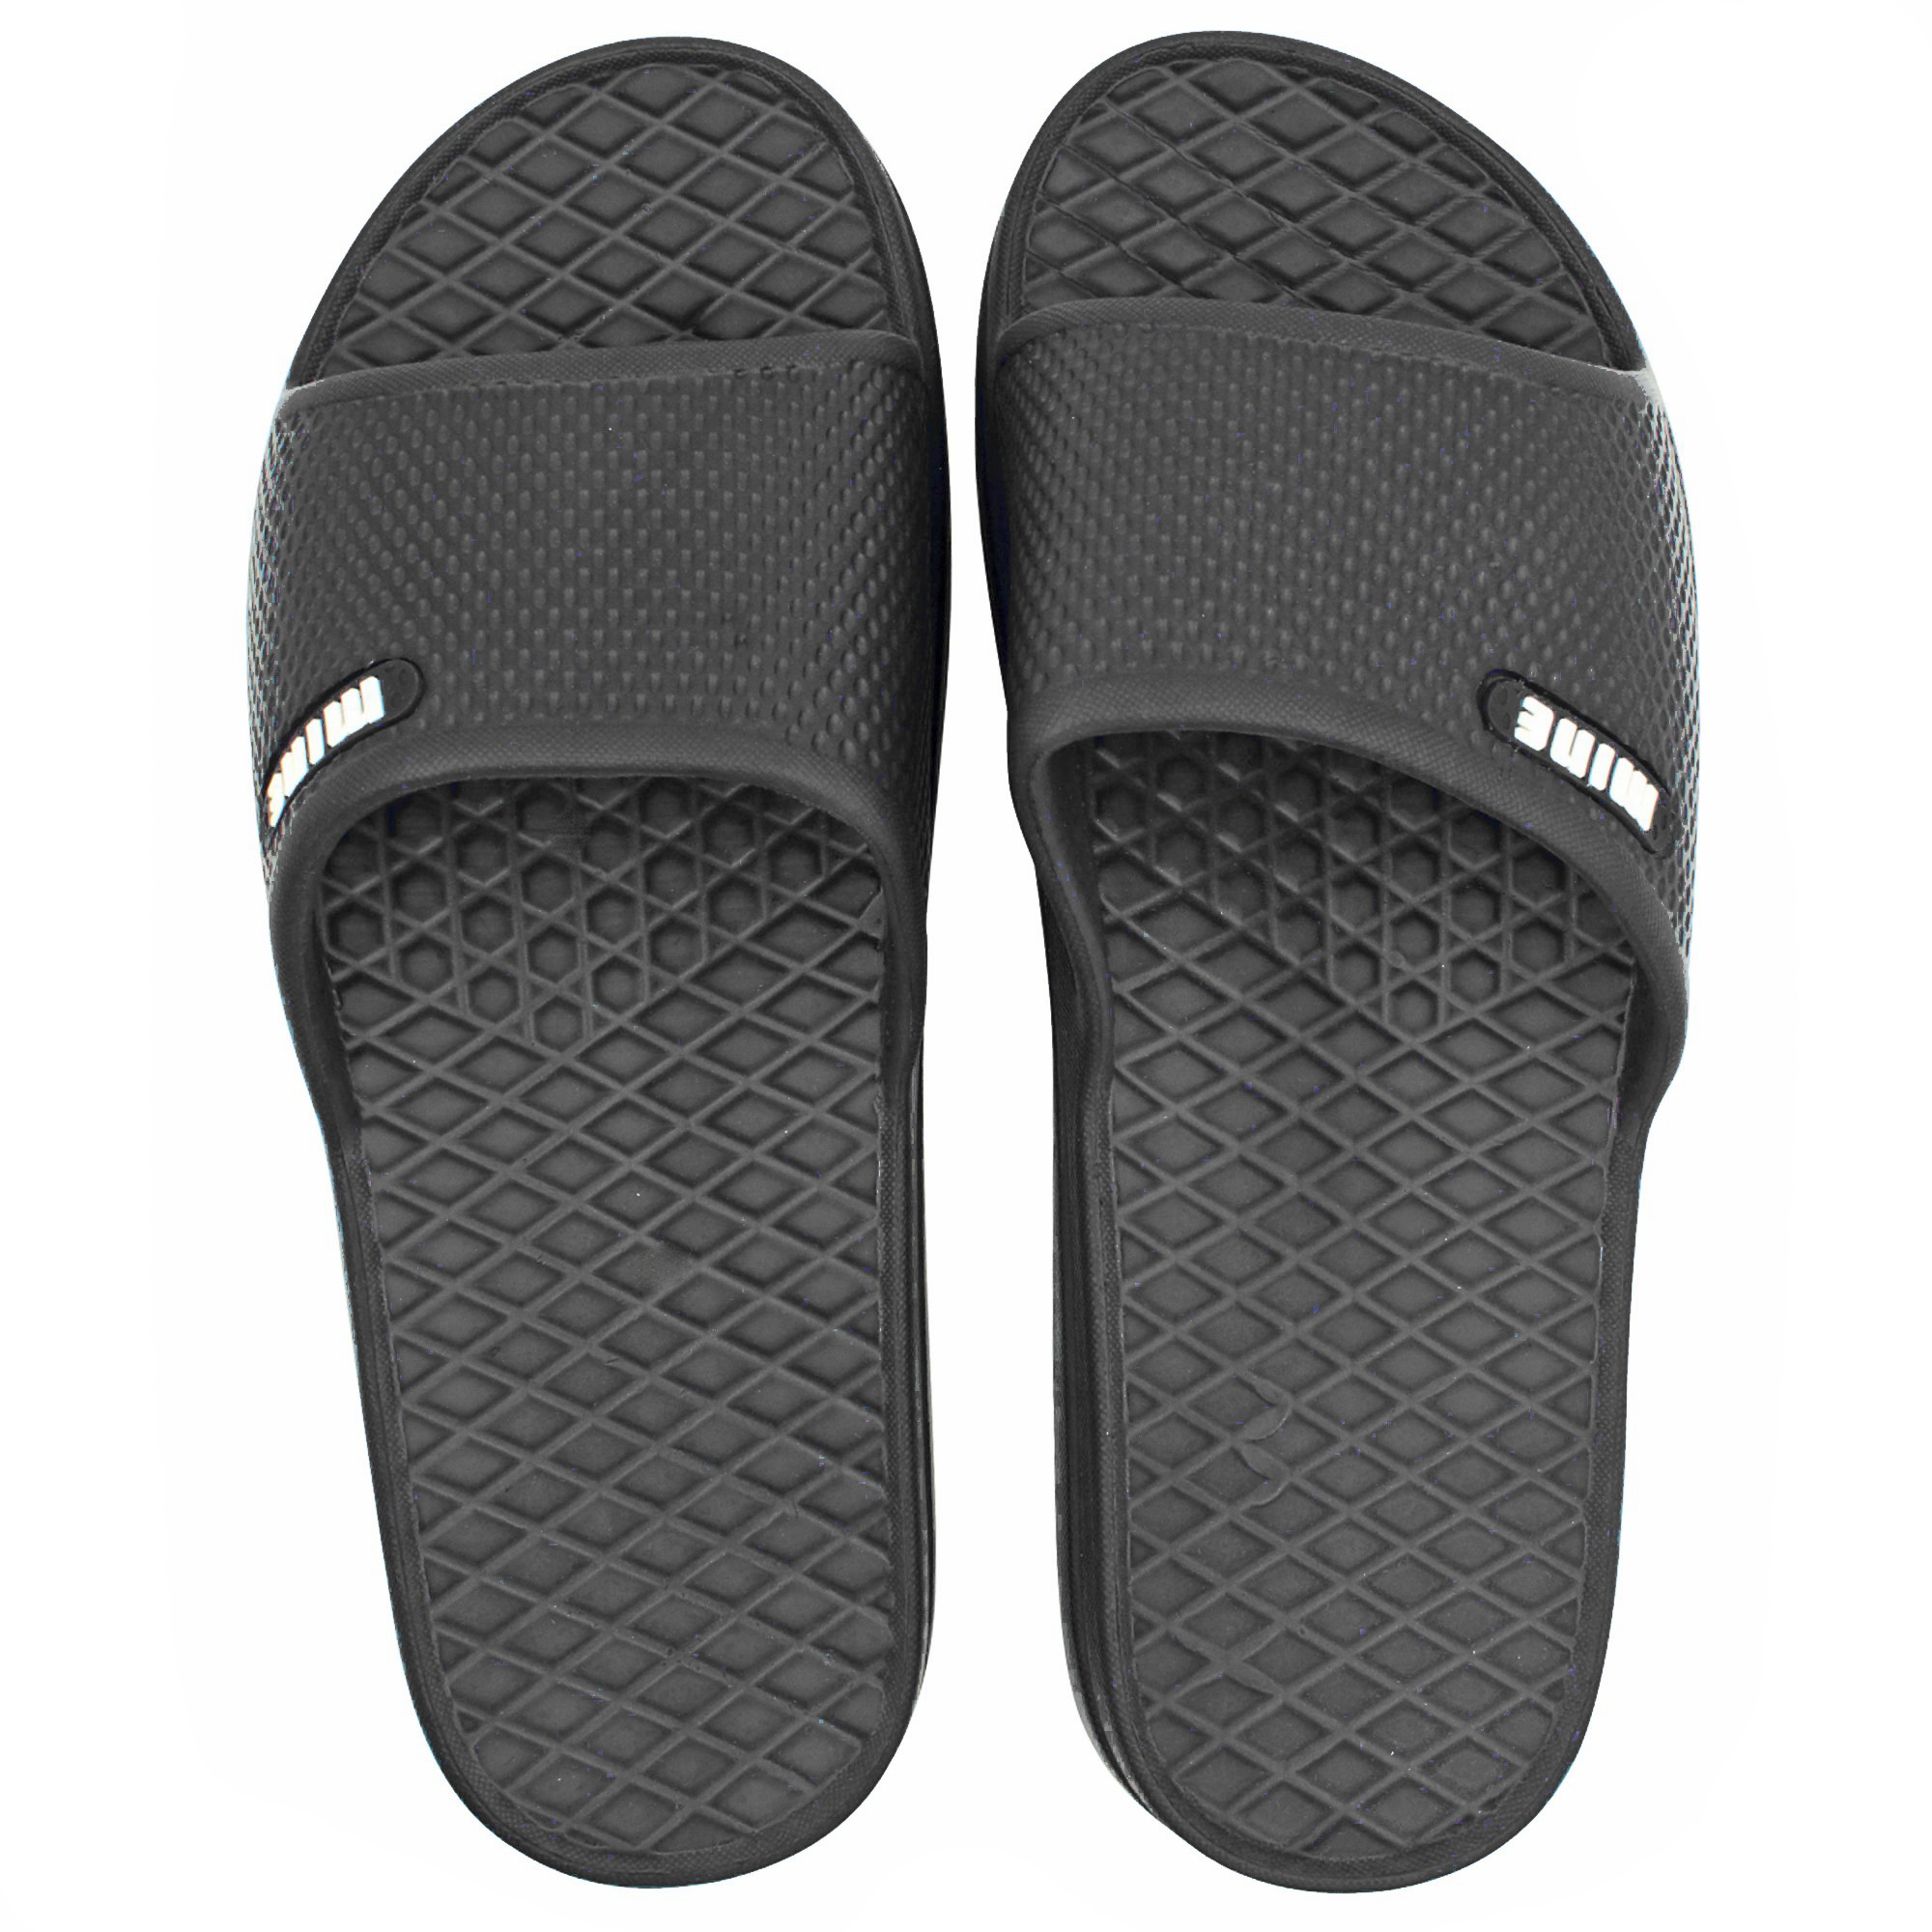 Men's Cushioned Slide Shower Slip On Shoes Casual Poolside Sandals | eBay